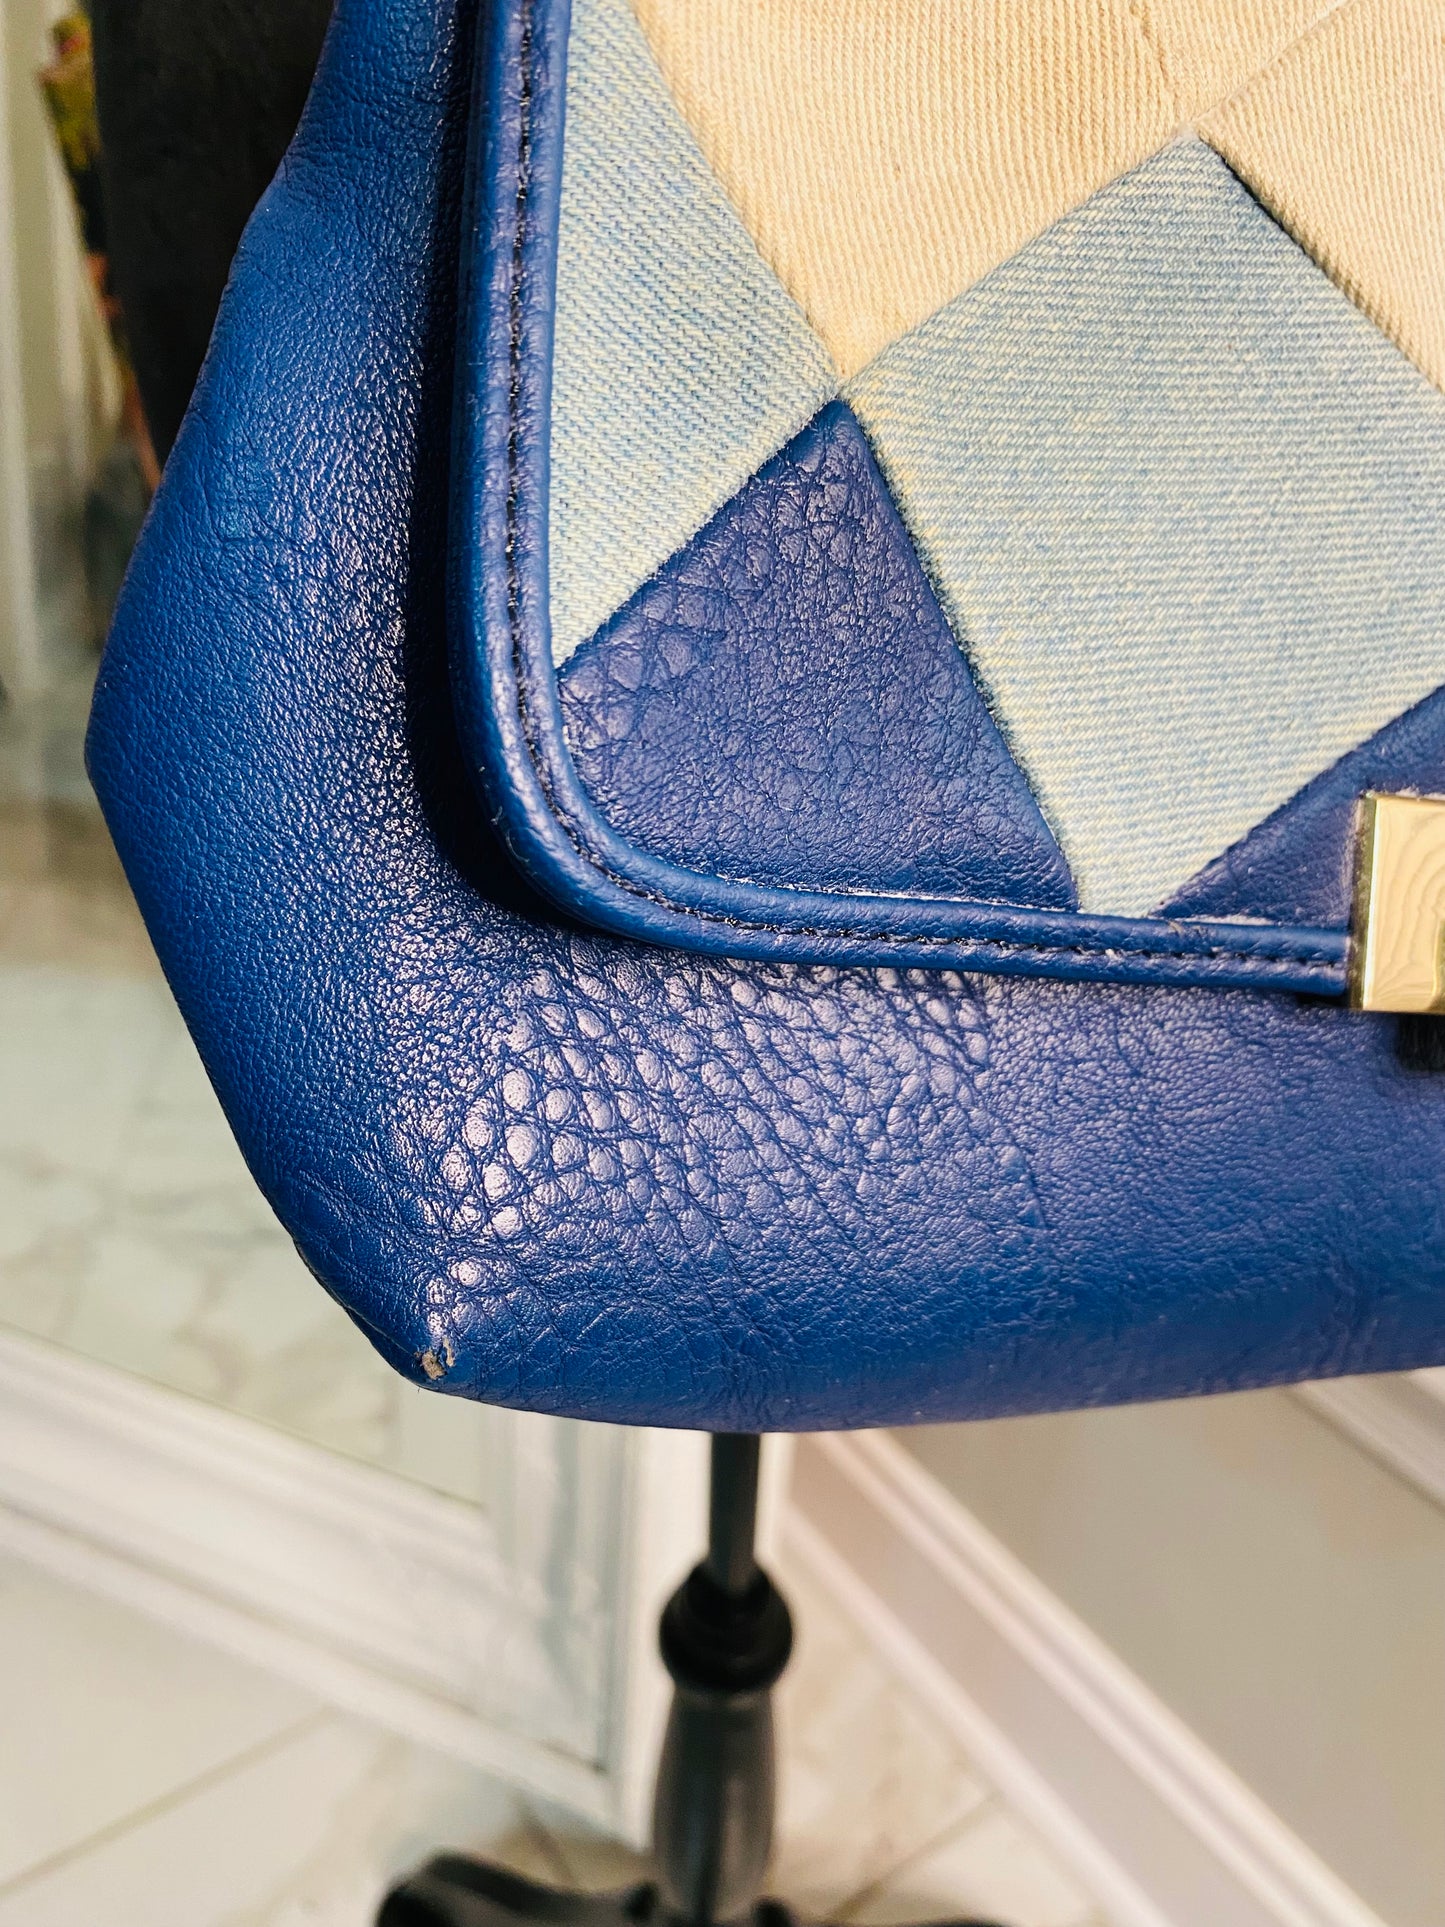 80s leather handbag with denim print